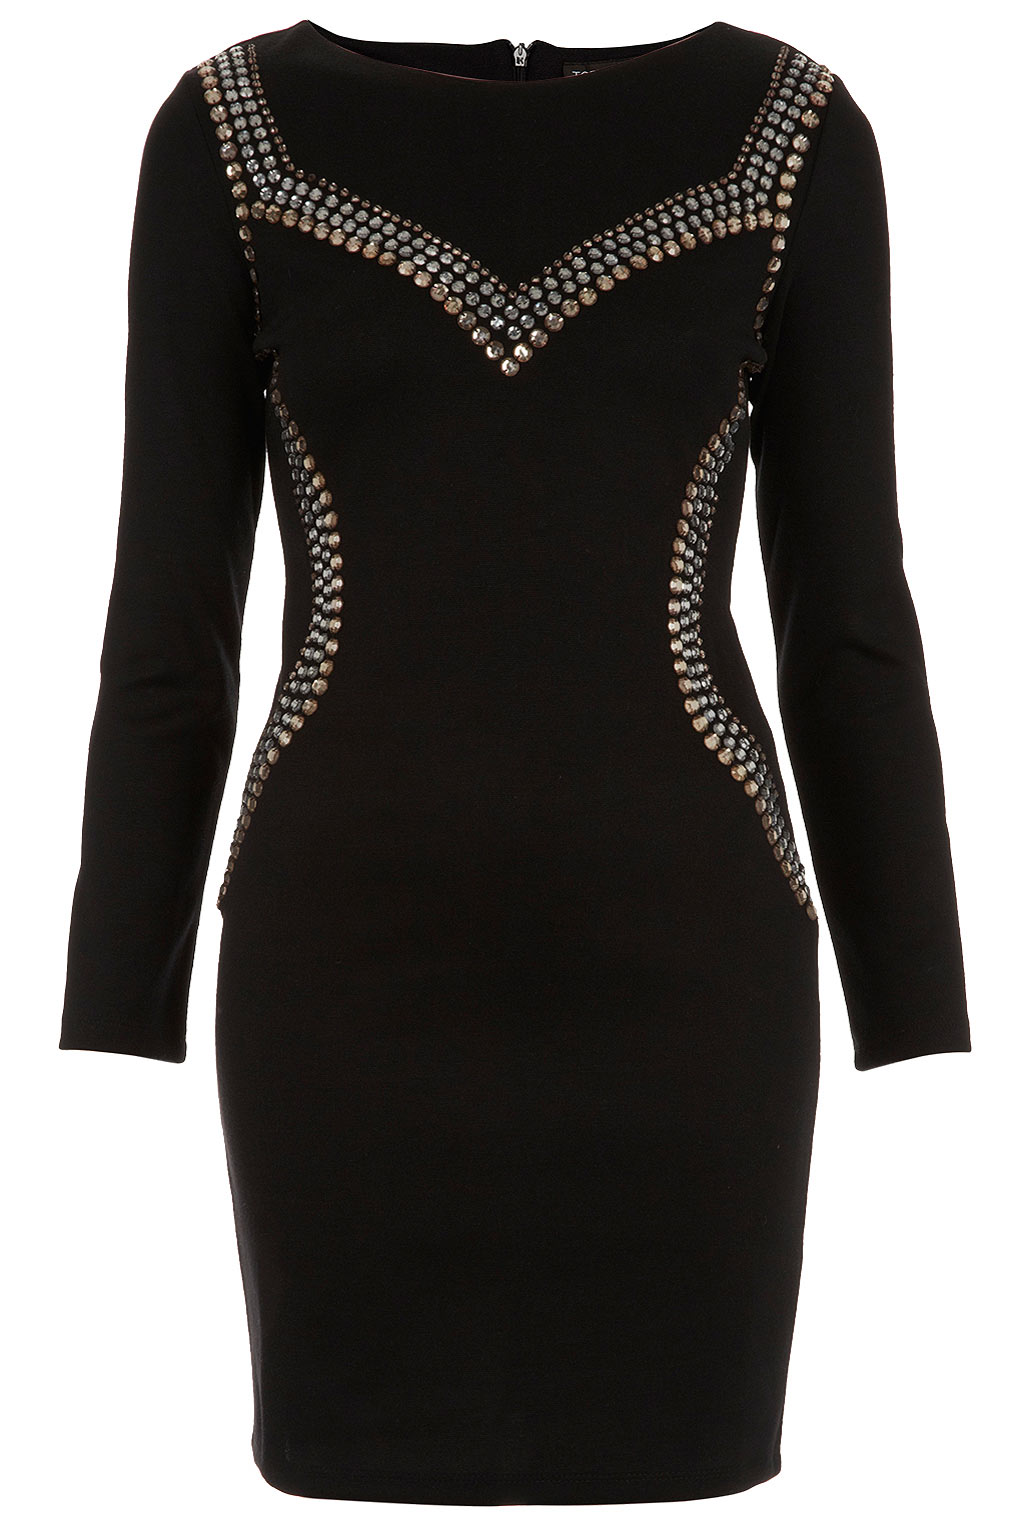 Lyst - Topshop Pattern Embellished Bodycon Dress in Black